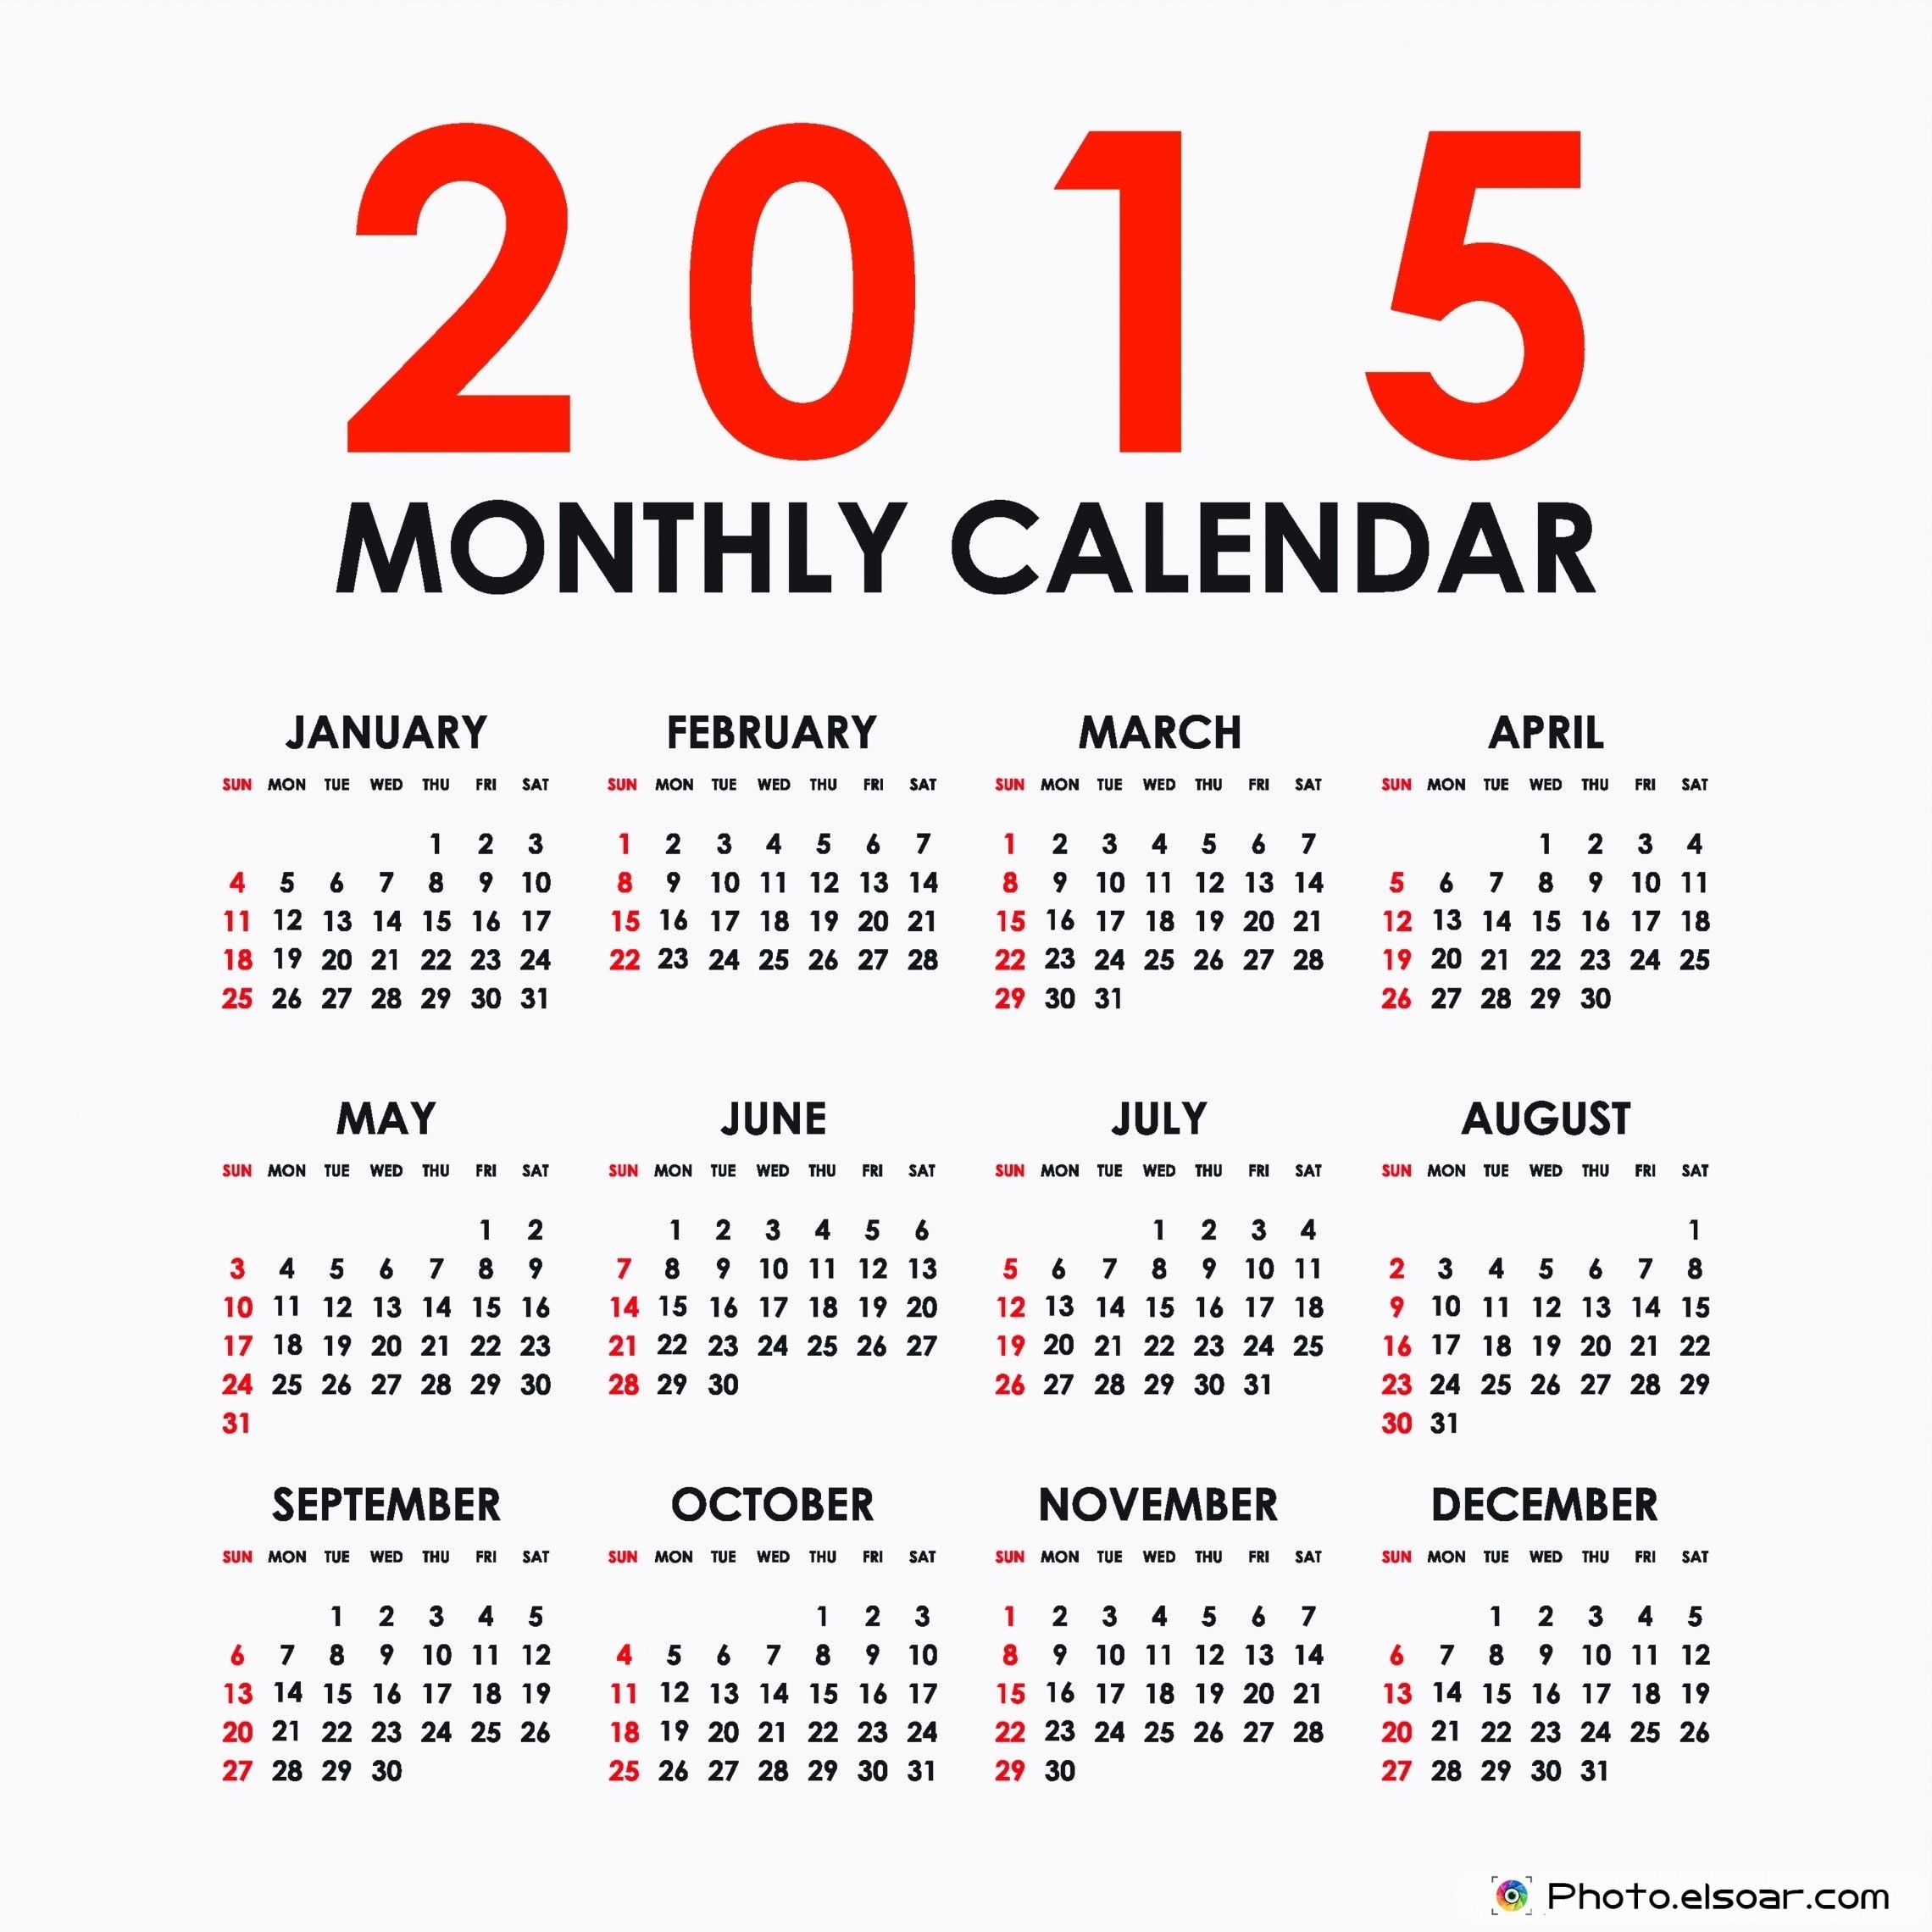 Ipad 2015 Calendar For Wallpaper Large | Simple Monthly 2015 Printing Calendar On Ipad